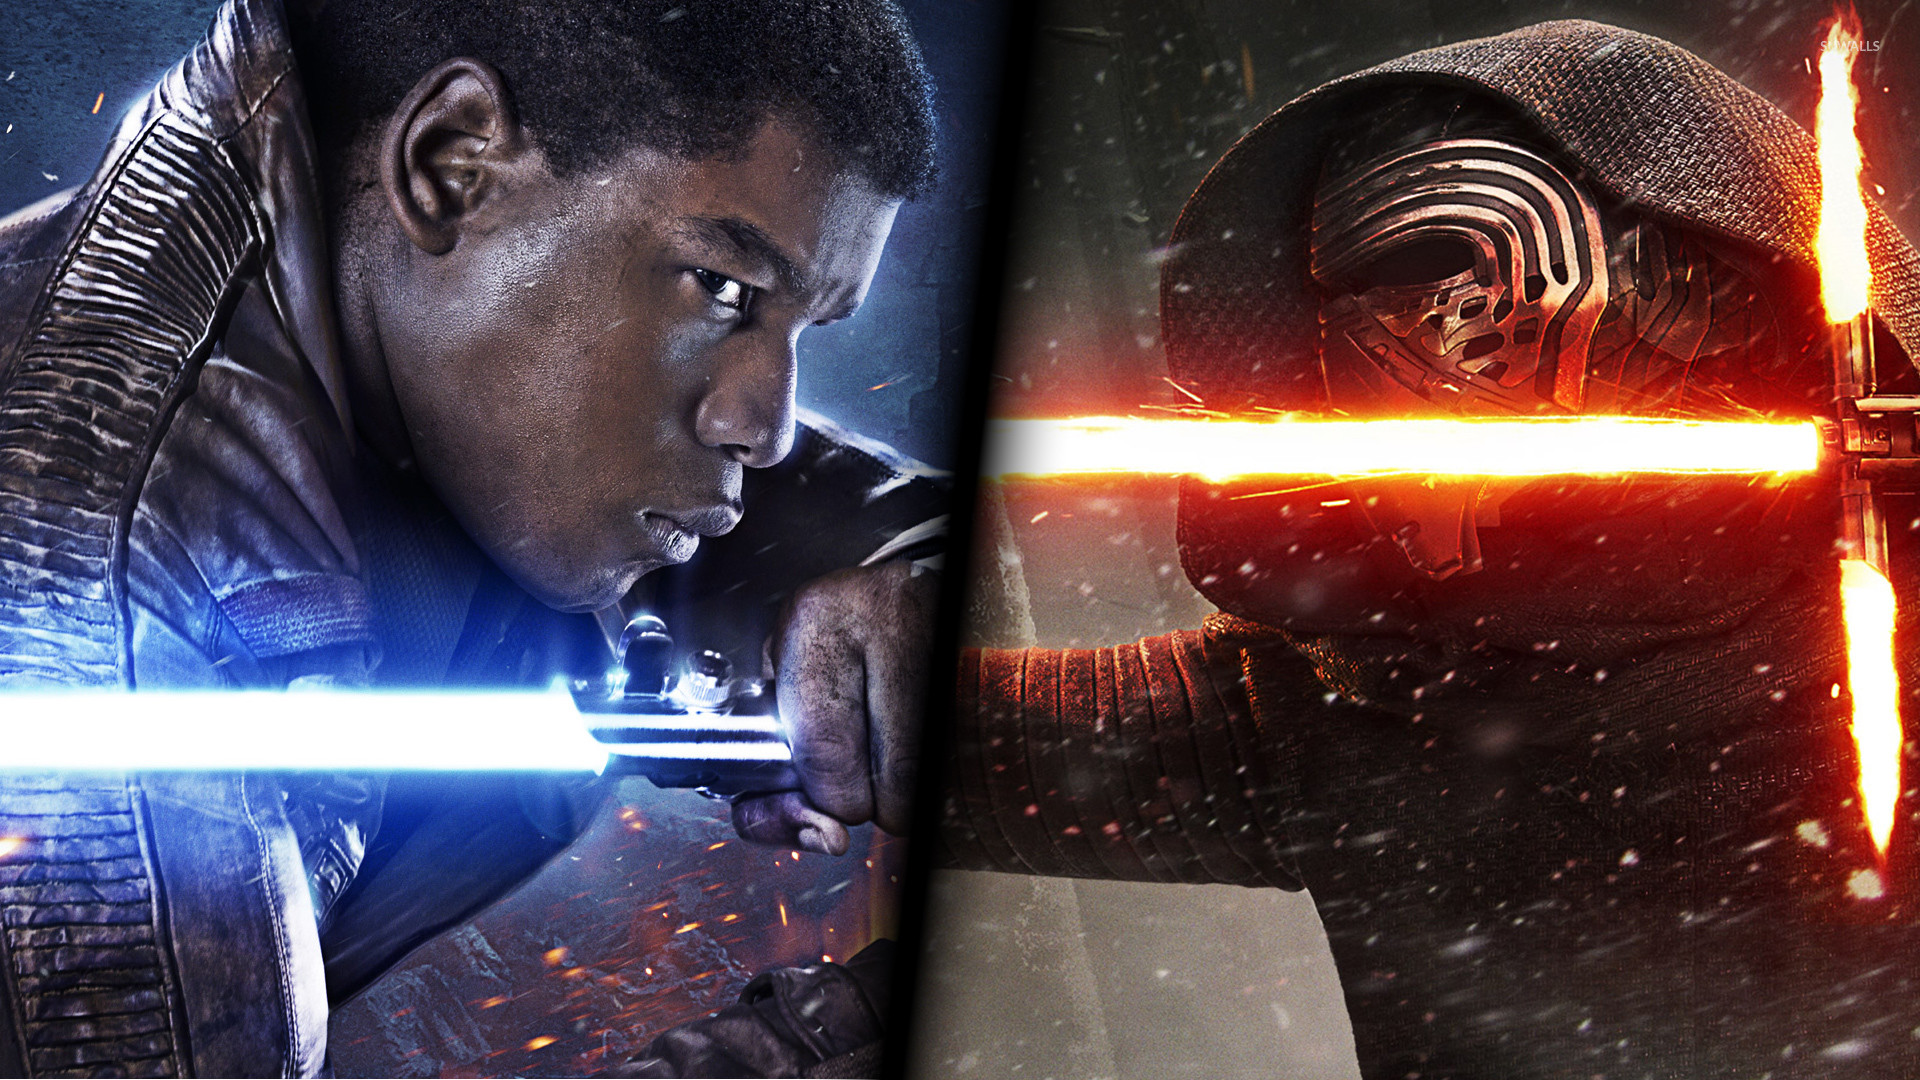 1920x1080 Finn vs Kylo Ren in Star Wars: The Force Awakens wallpaper